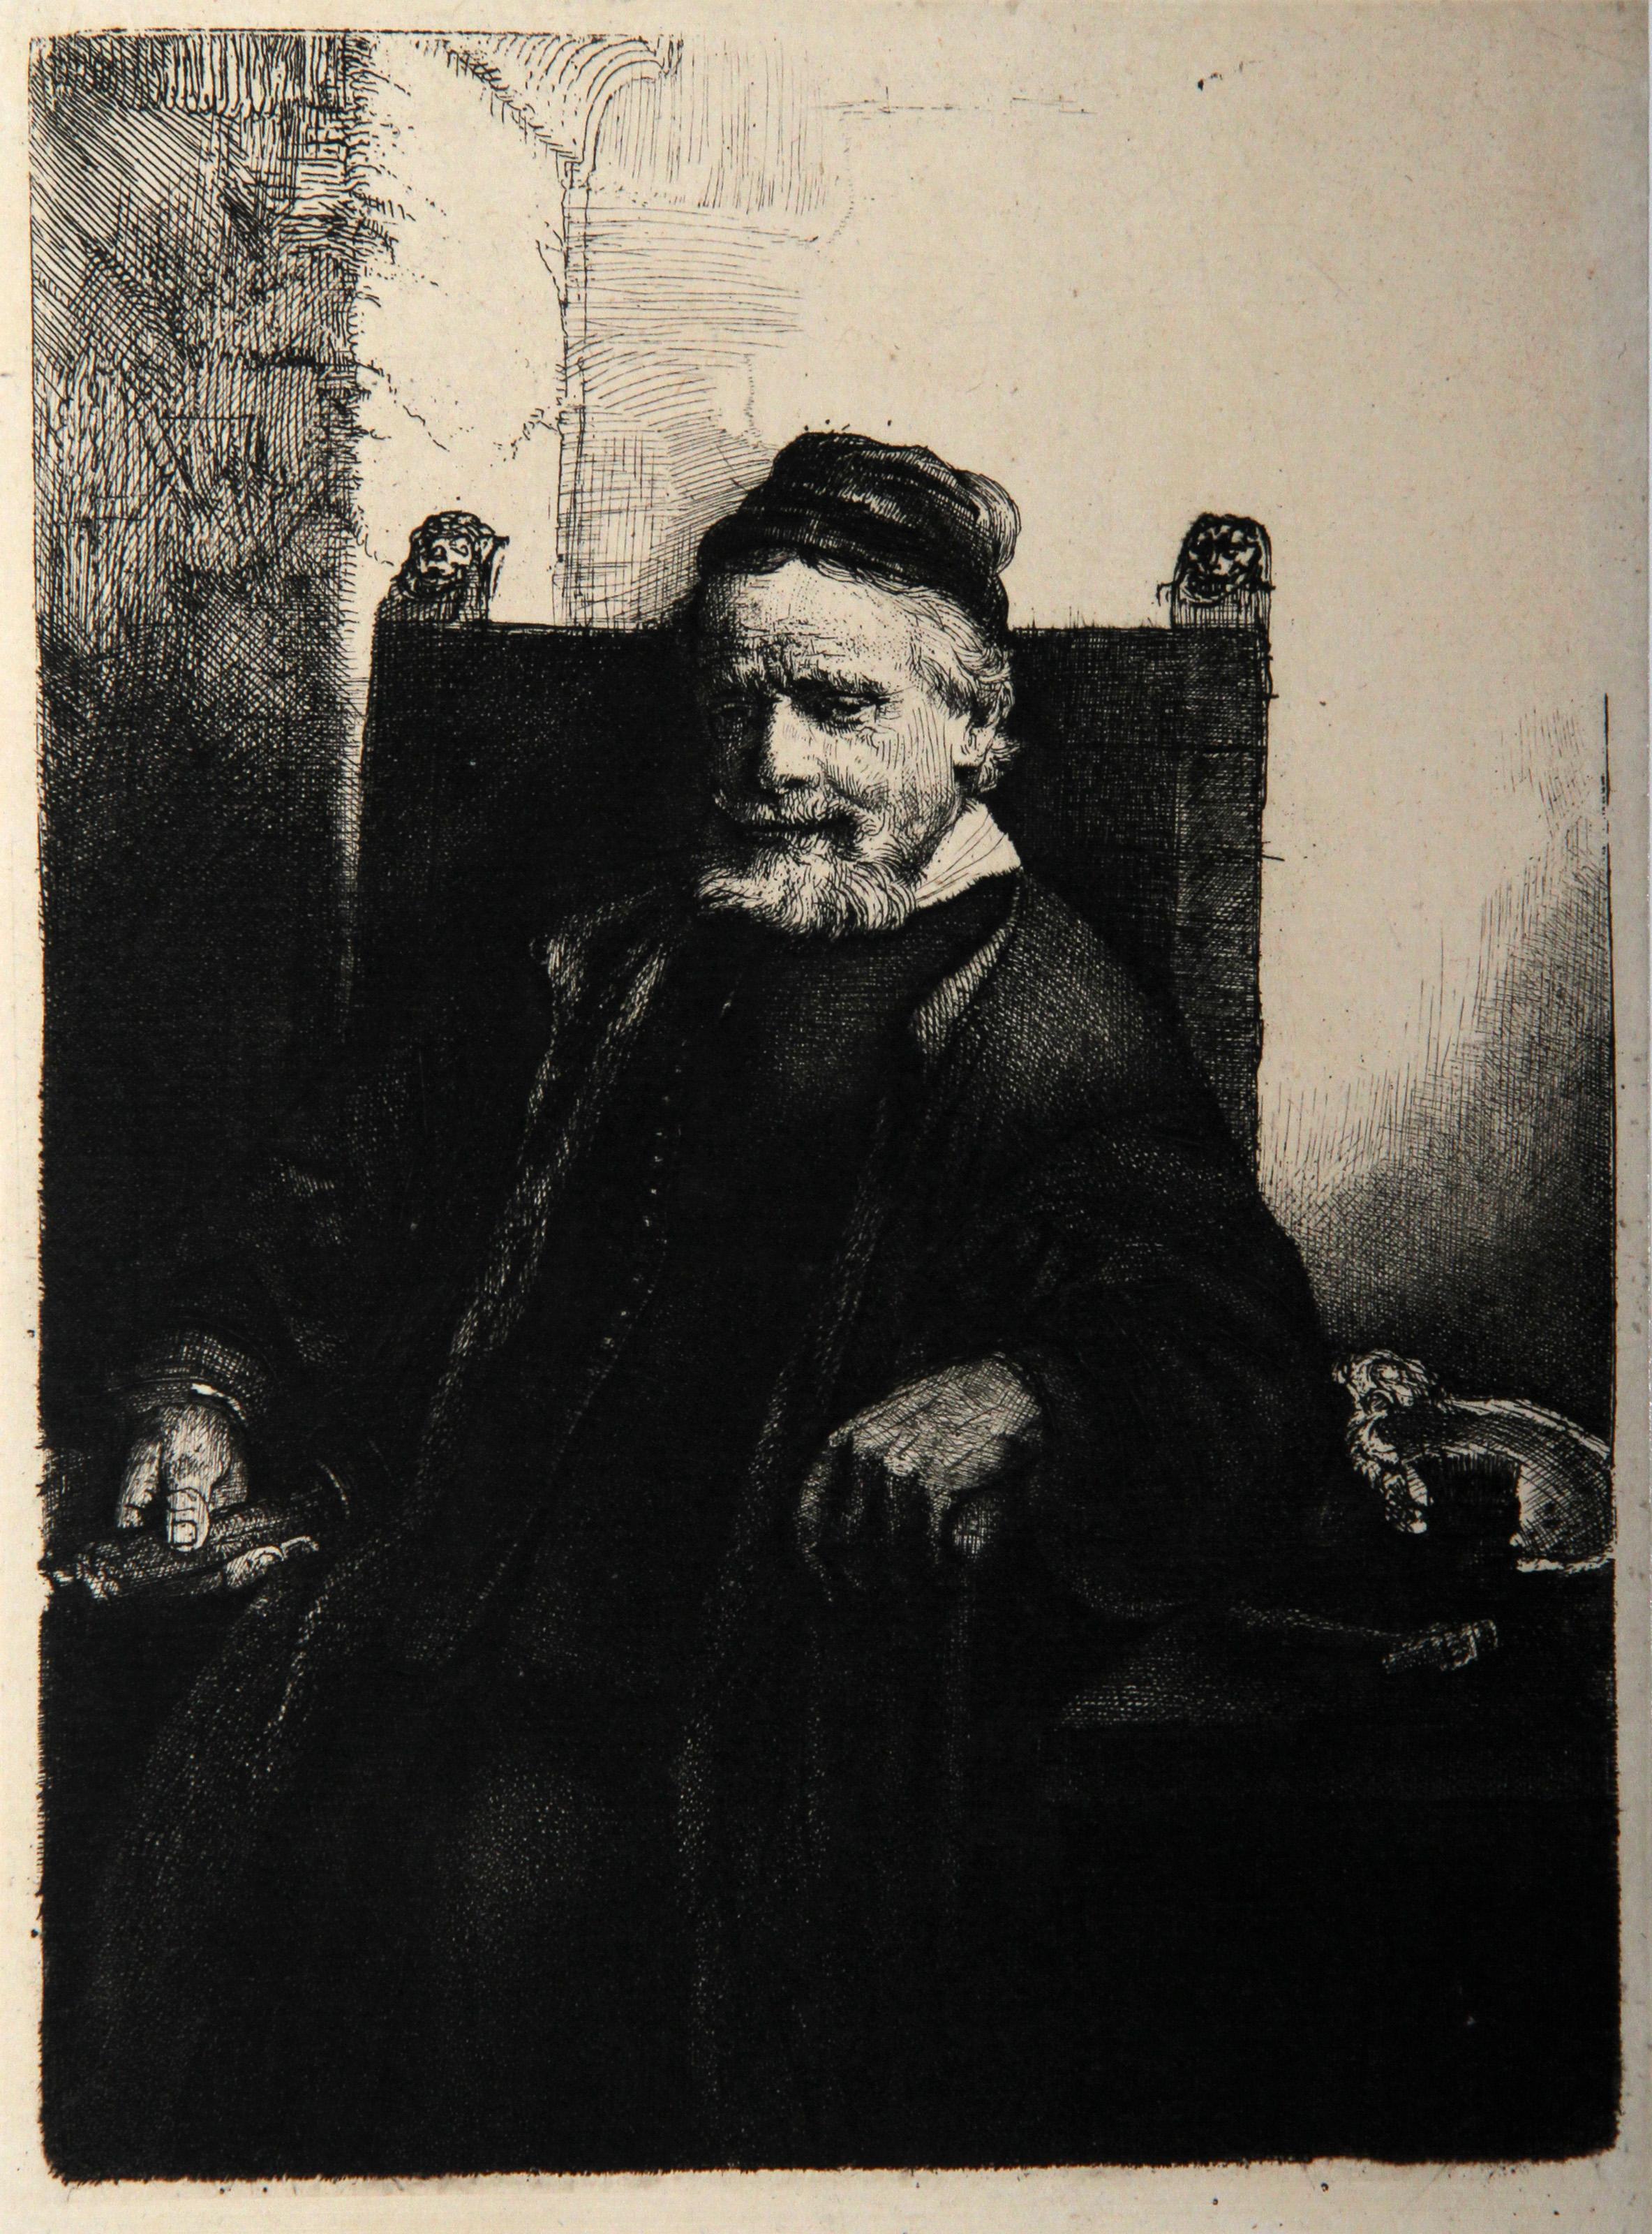 Rembrandt van Rijn, After by Amand Durand, Dutch (1606 - 1669) -  Portrait de Jean Lutma (B276). Year: 1878 (of original 1656), Medium: Heliogravure, Size: 8  x 6 in. (20.32  x 15.24 cm), Printer: Amand Durand, Description: French Engraver and